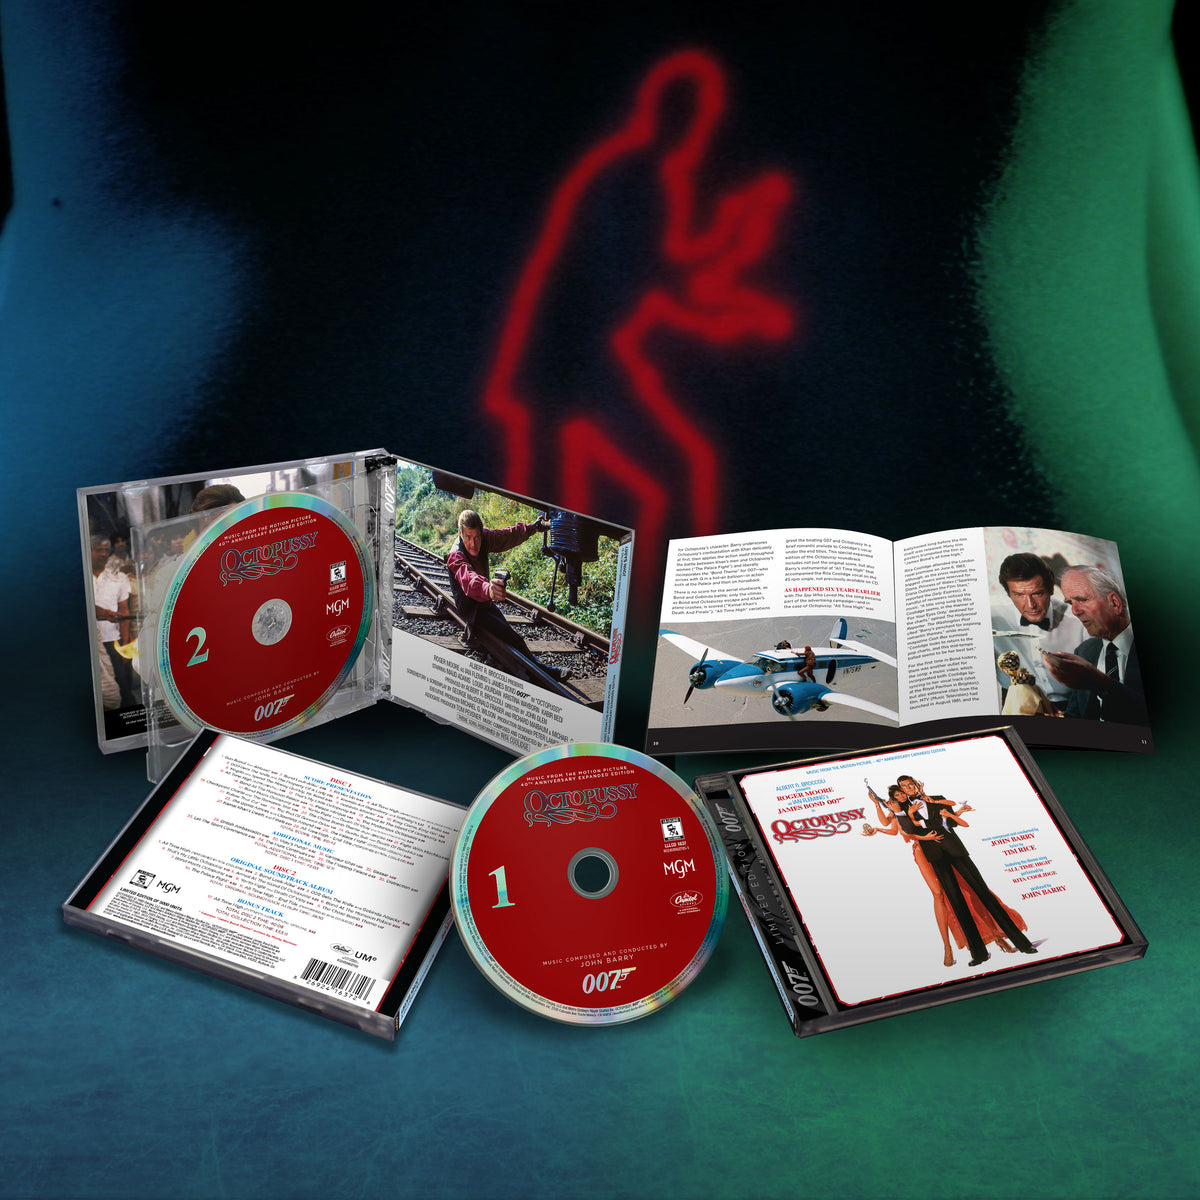 James Bond Octopussy Soundtrack-Doppel-CD-Set – Erweiterte Remastered Edition zum 40. Jubiläum